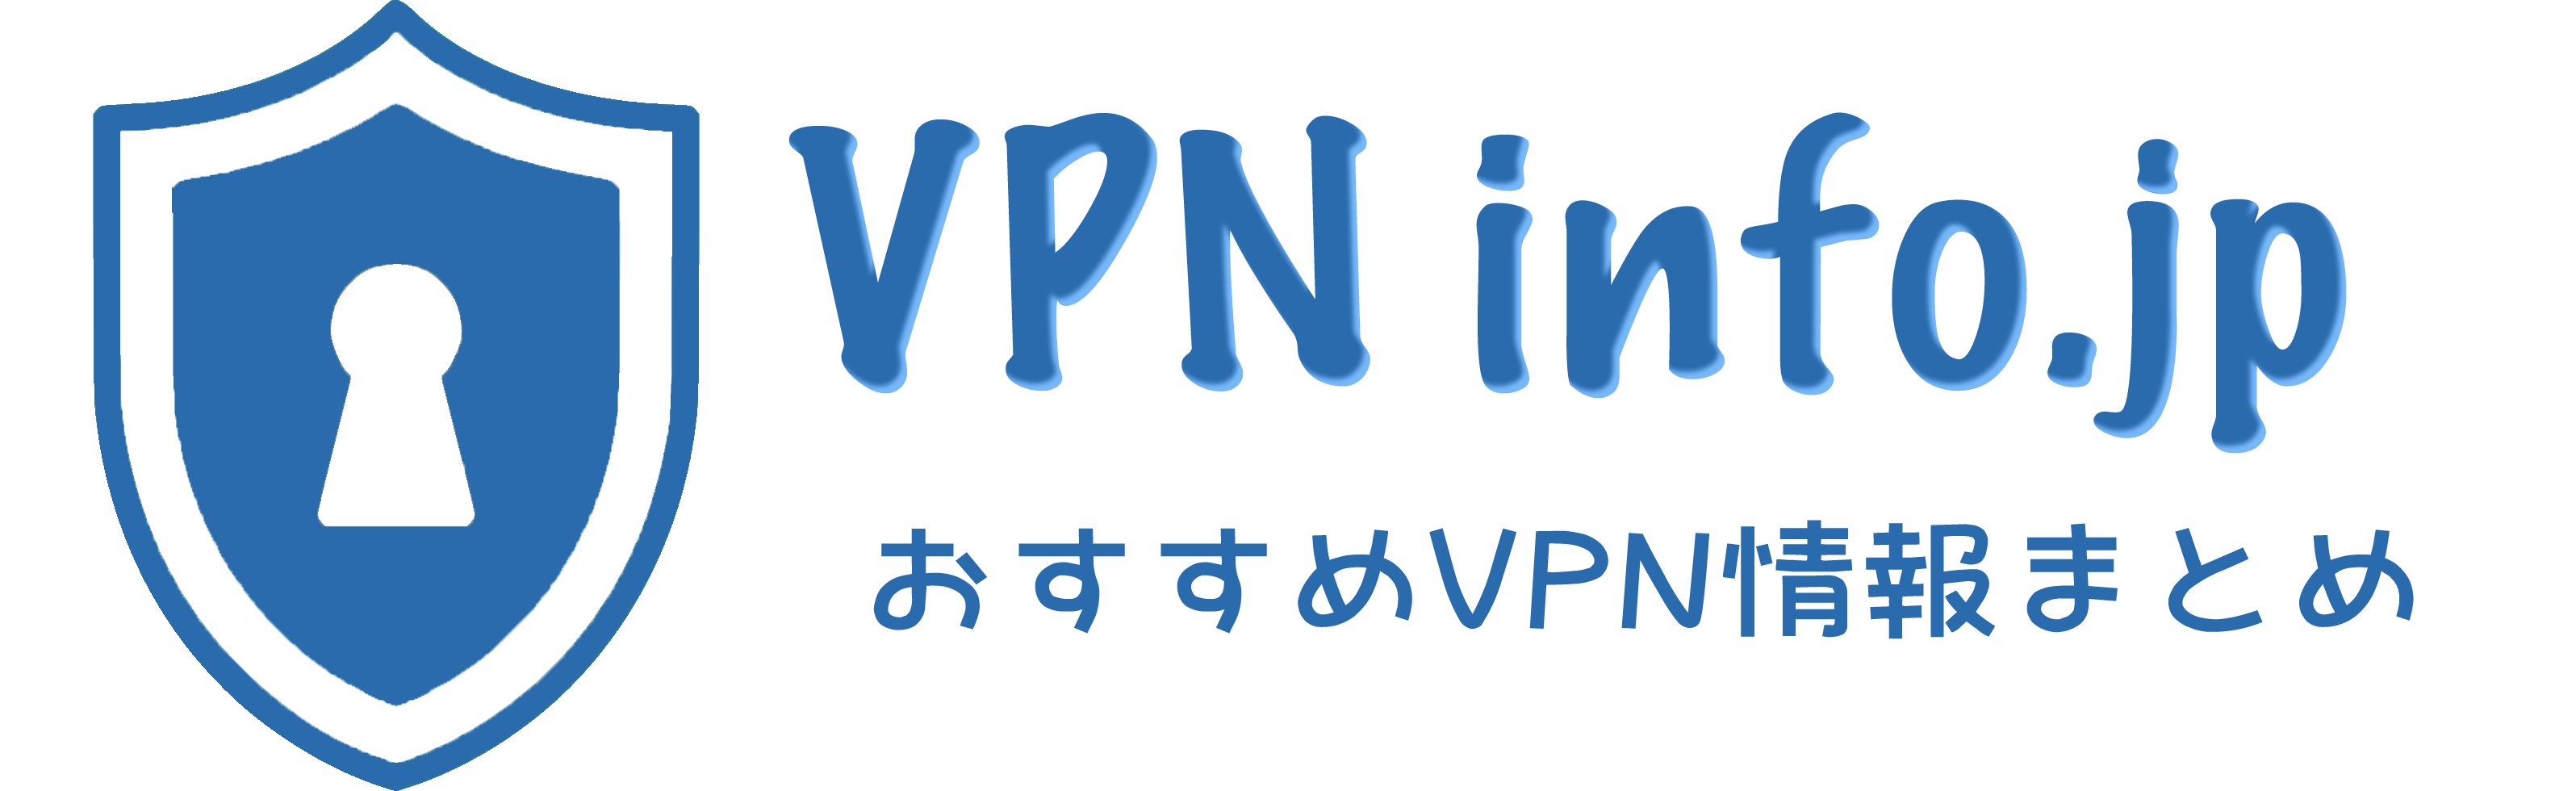 VPN info.jp